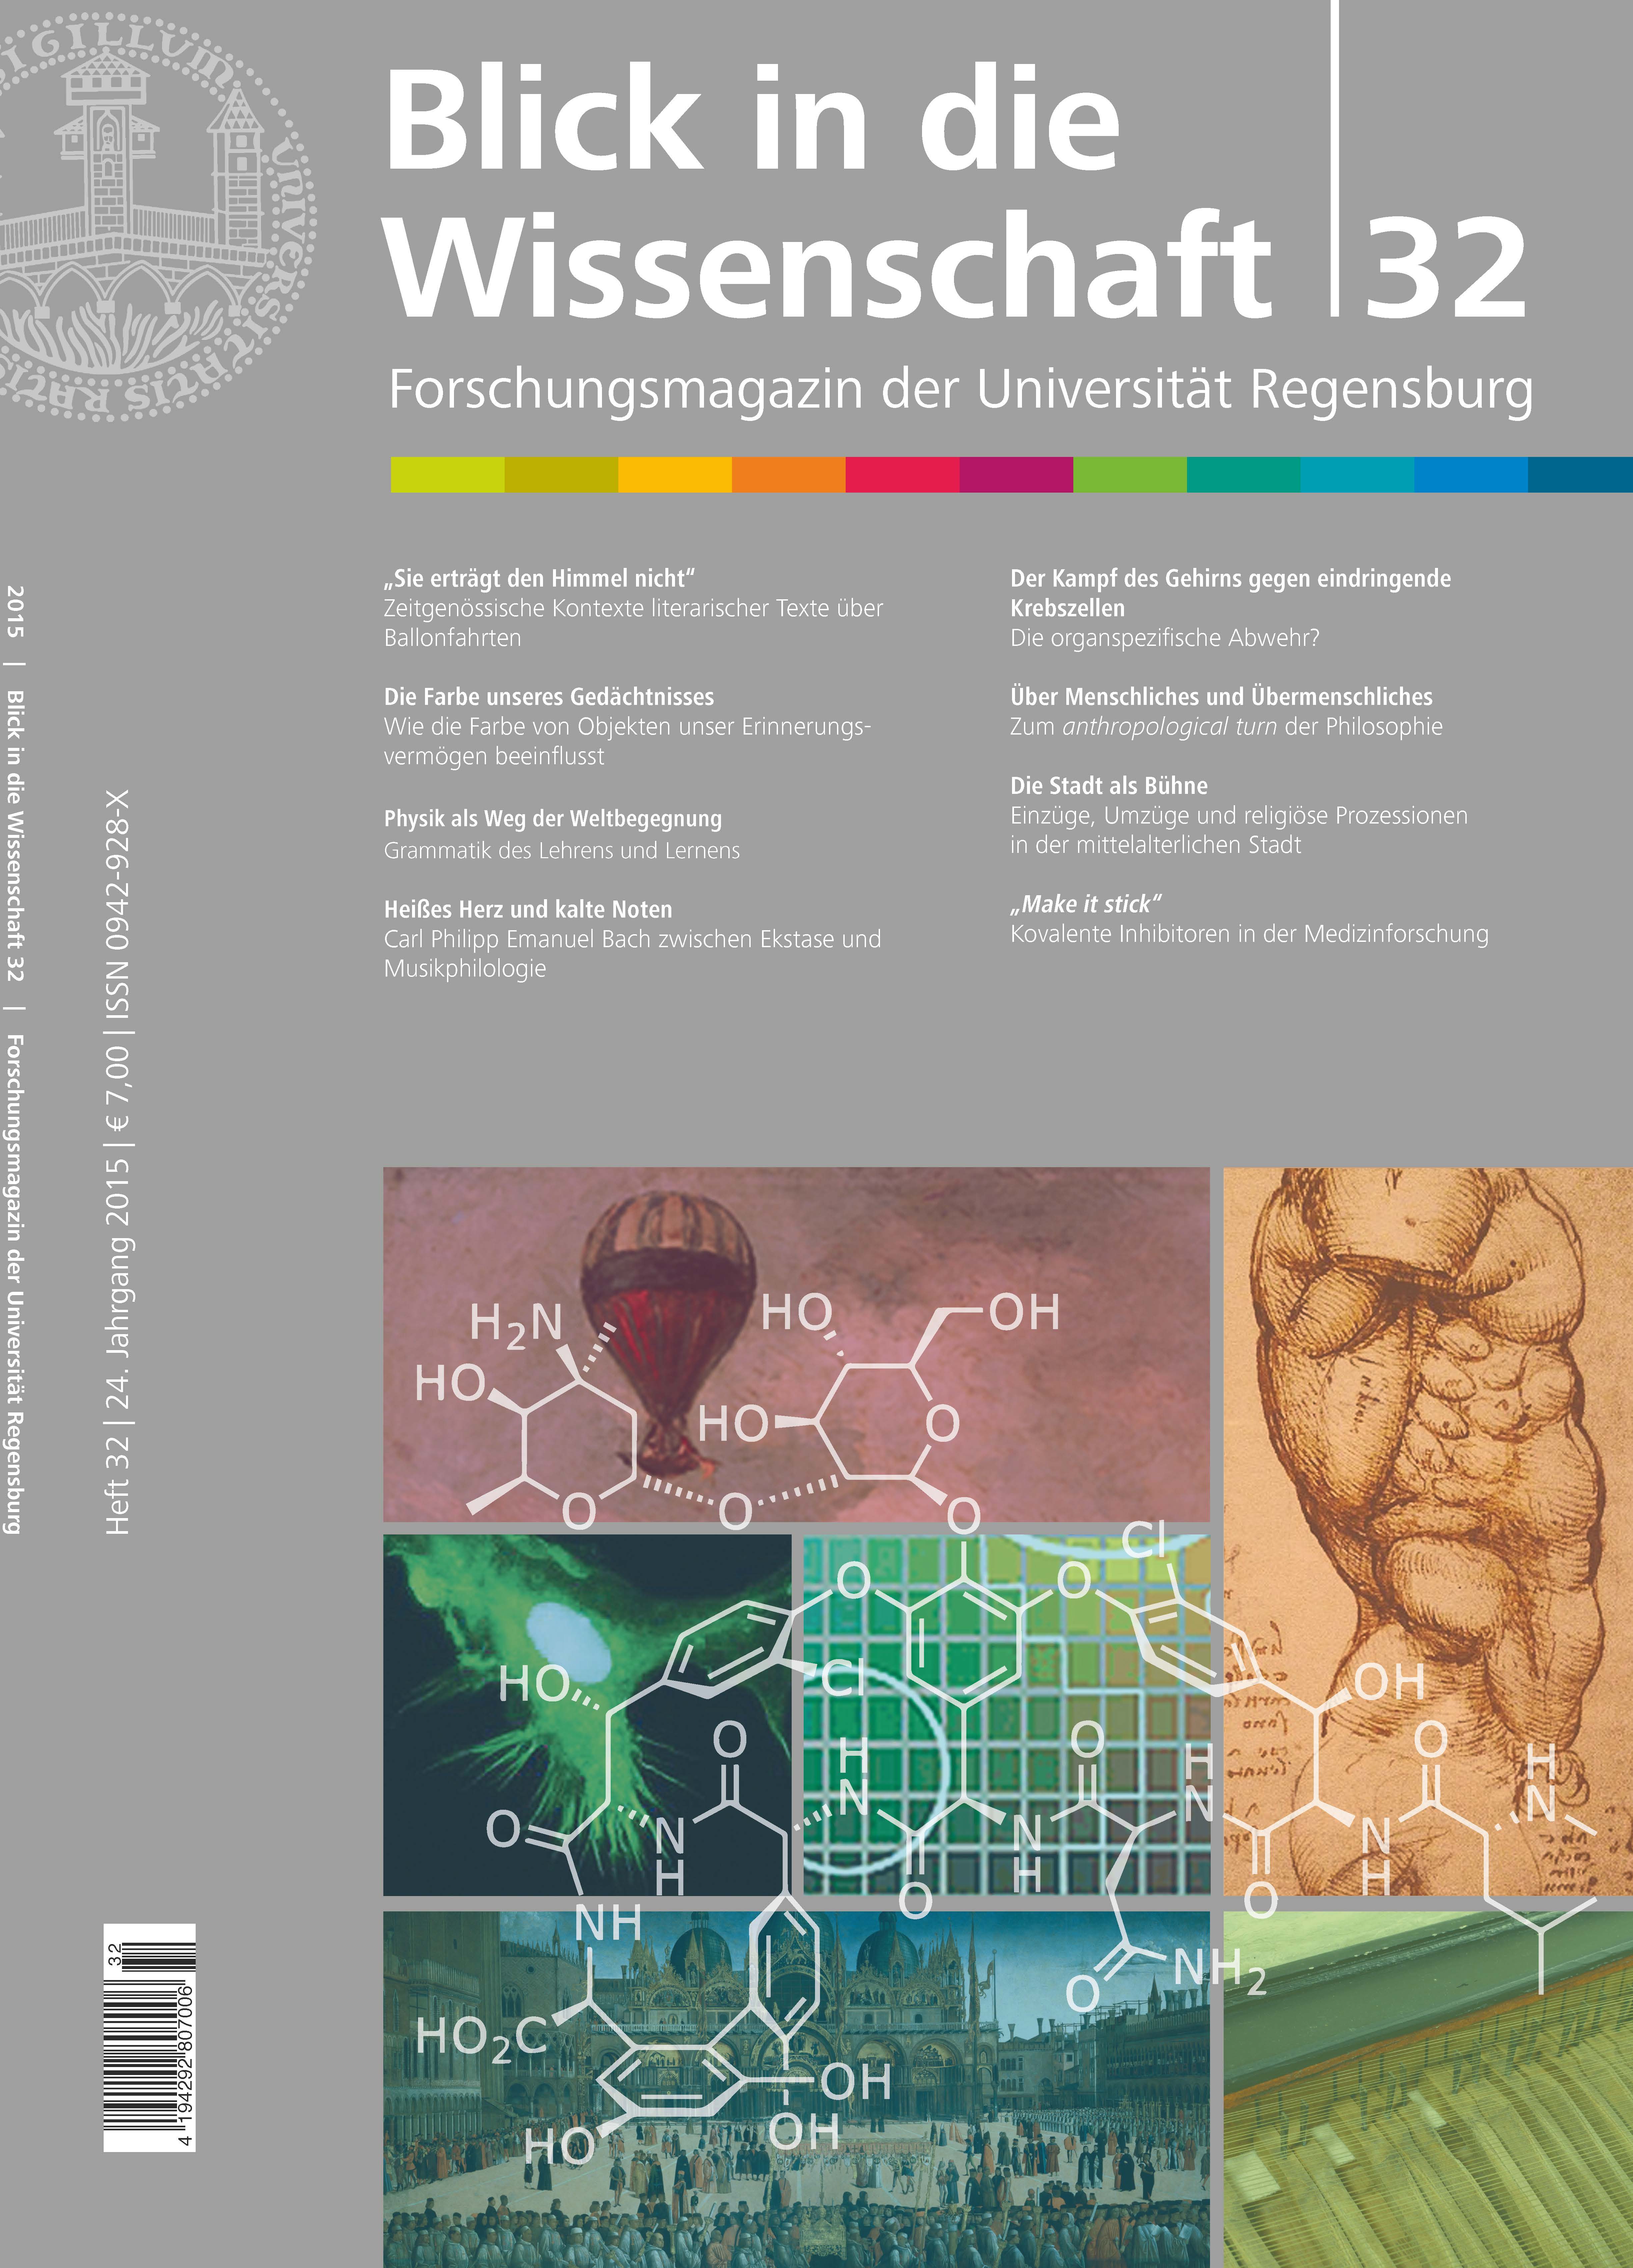 Forschungsmagazin der Universität Regensburg